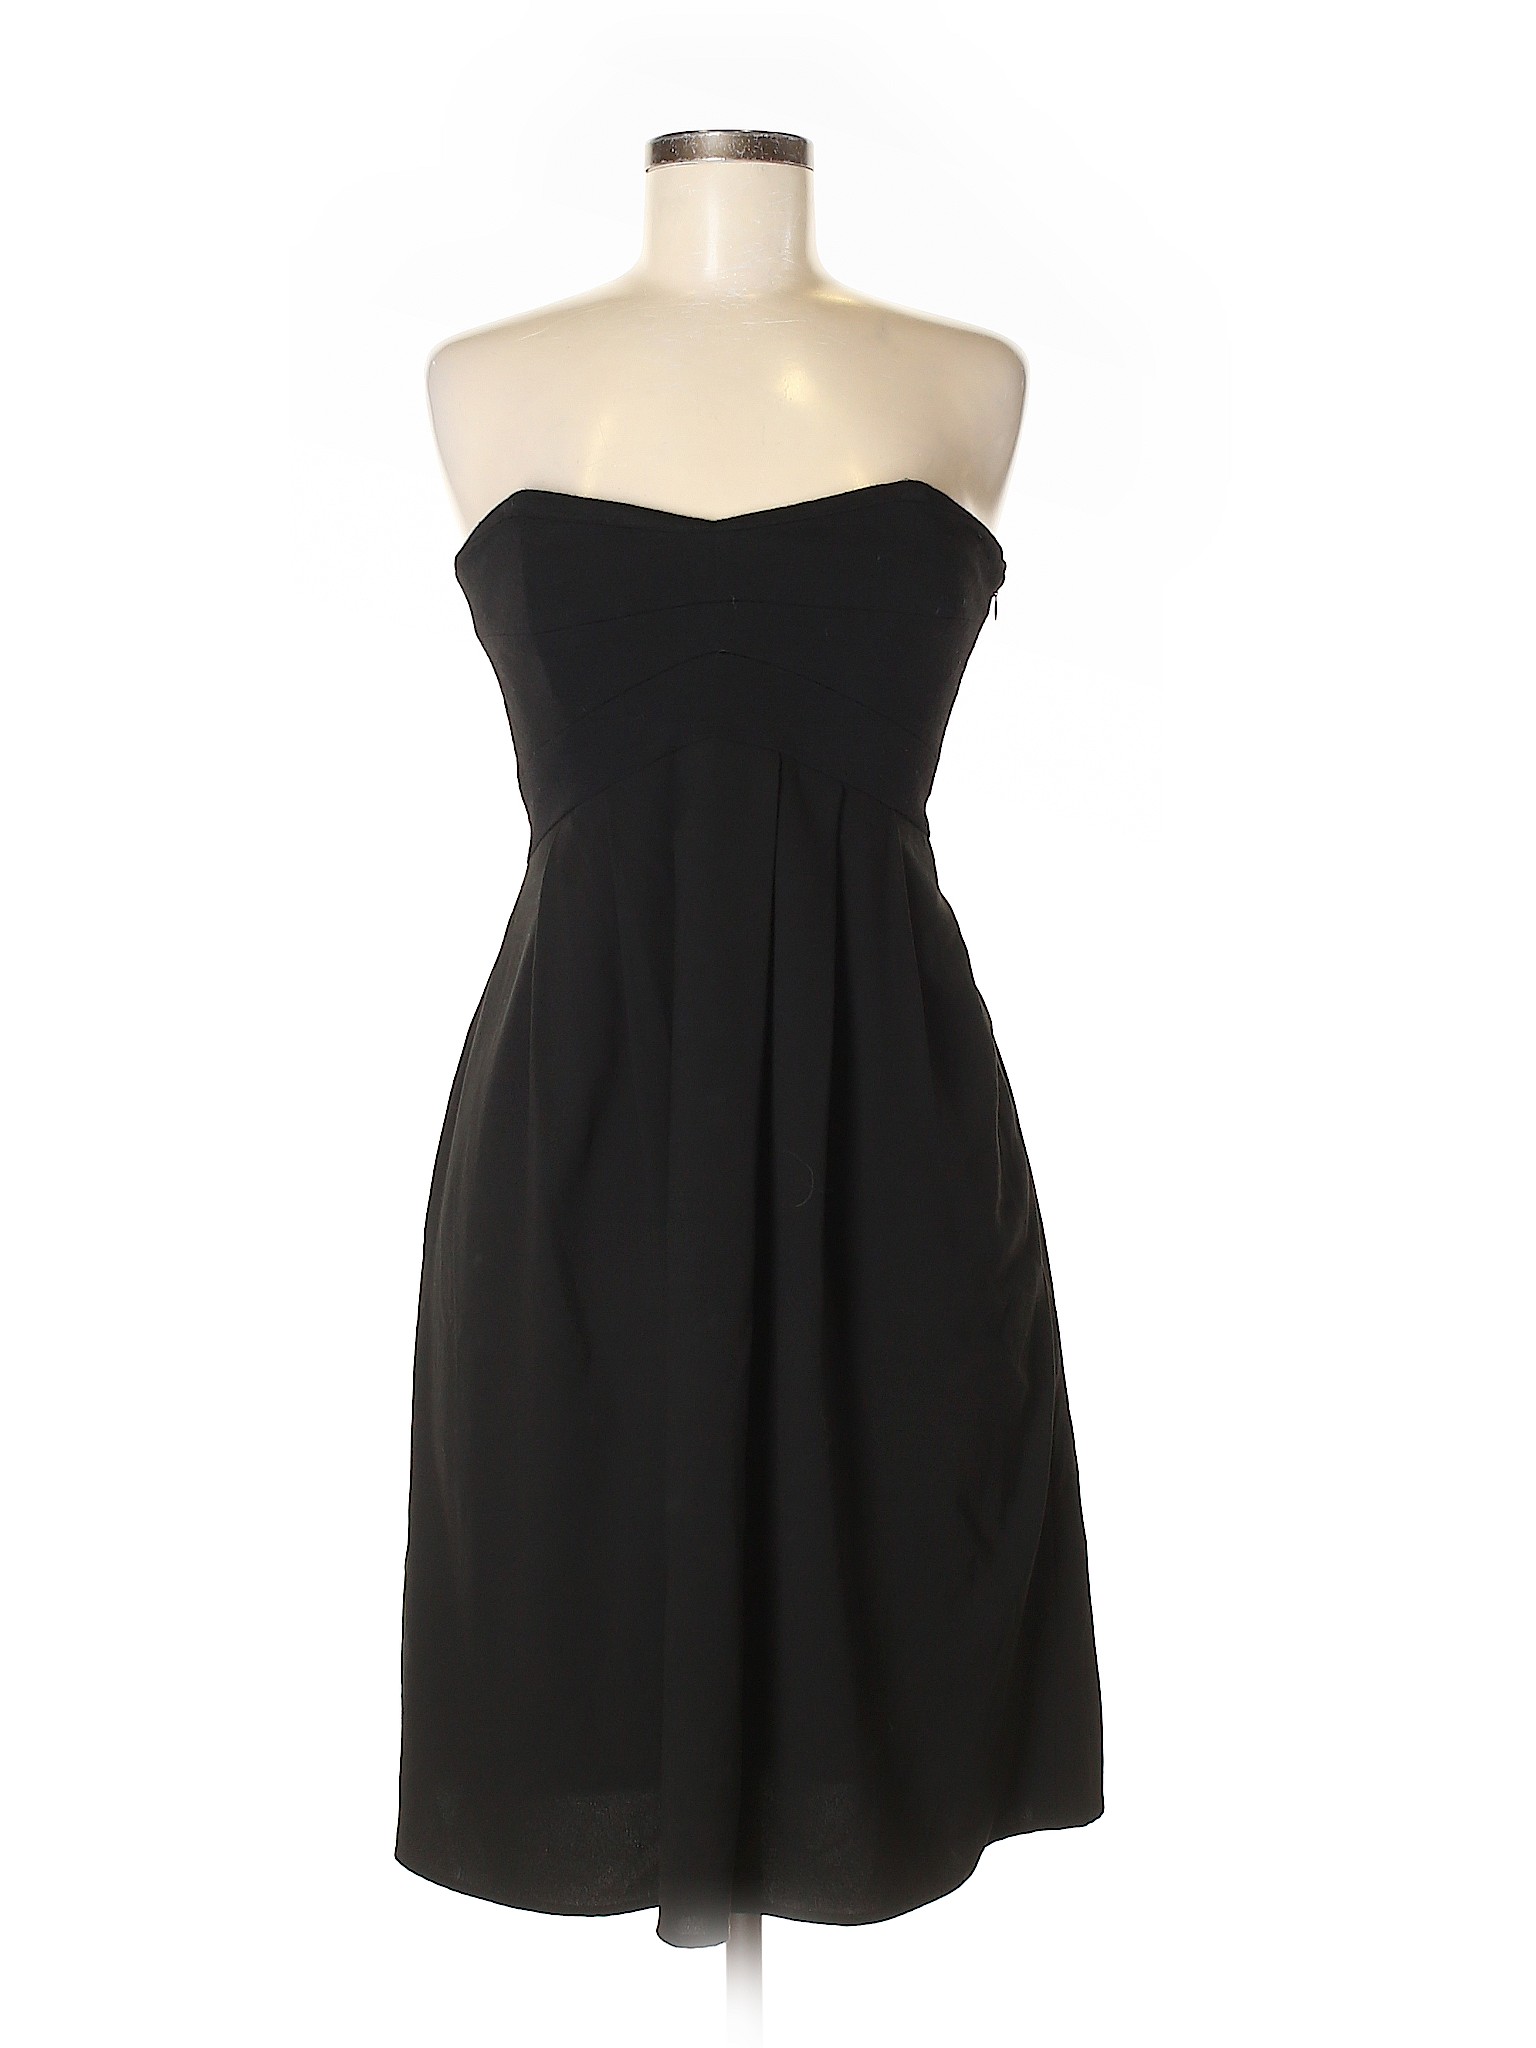 Club Monaco 100% Wool Solid Black Cocktail Dress Size 6 - 97% off | thredUP